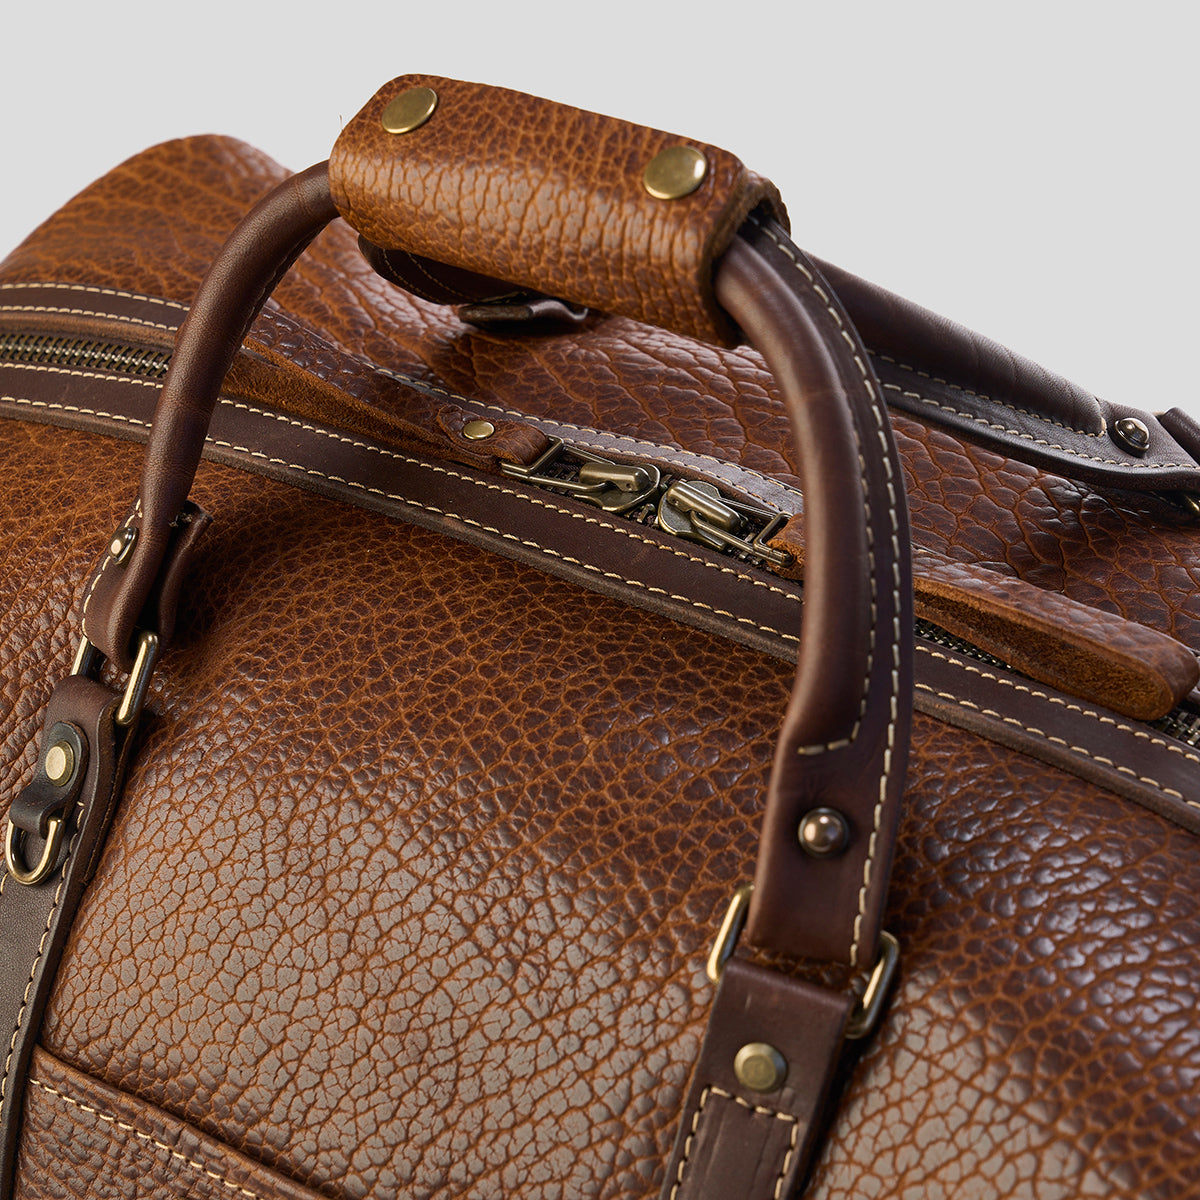 Denver Men's Leather Travel Duffle Bag